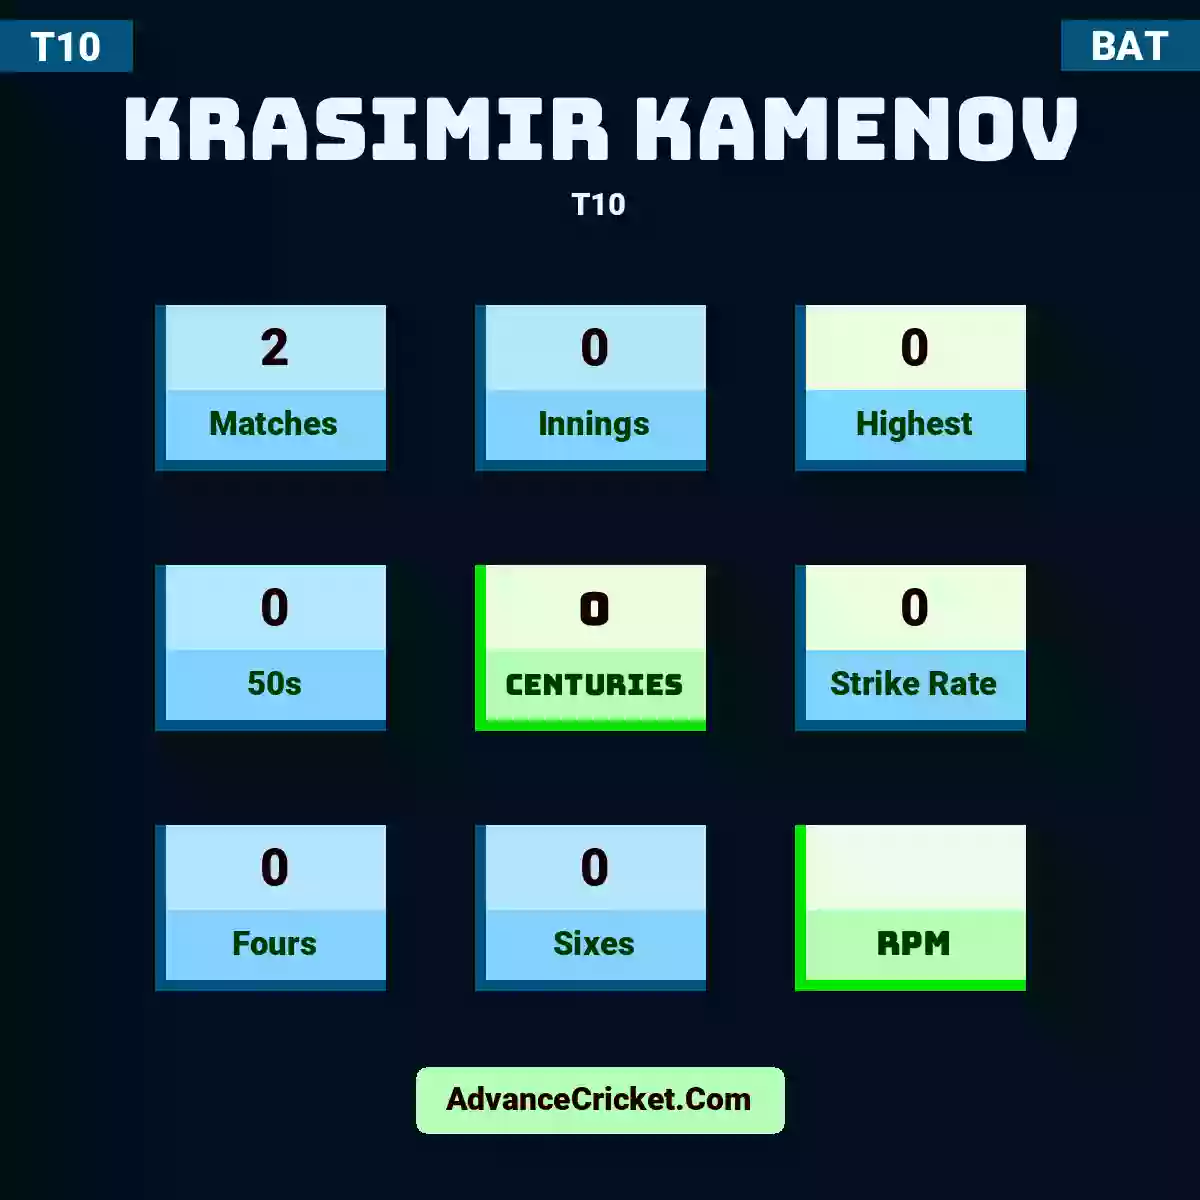 Krasimir Kamenov T10 , Krasimir Kamenov played 2 matches, scored 0 runs as highest, 0 half-centuries, and 0 centuries, with a strike rate of 0. K.Kamenov hit 0 fours and 0 sixes.